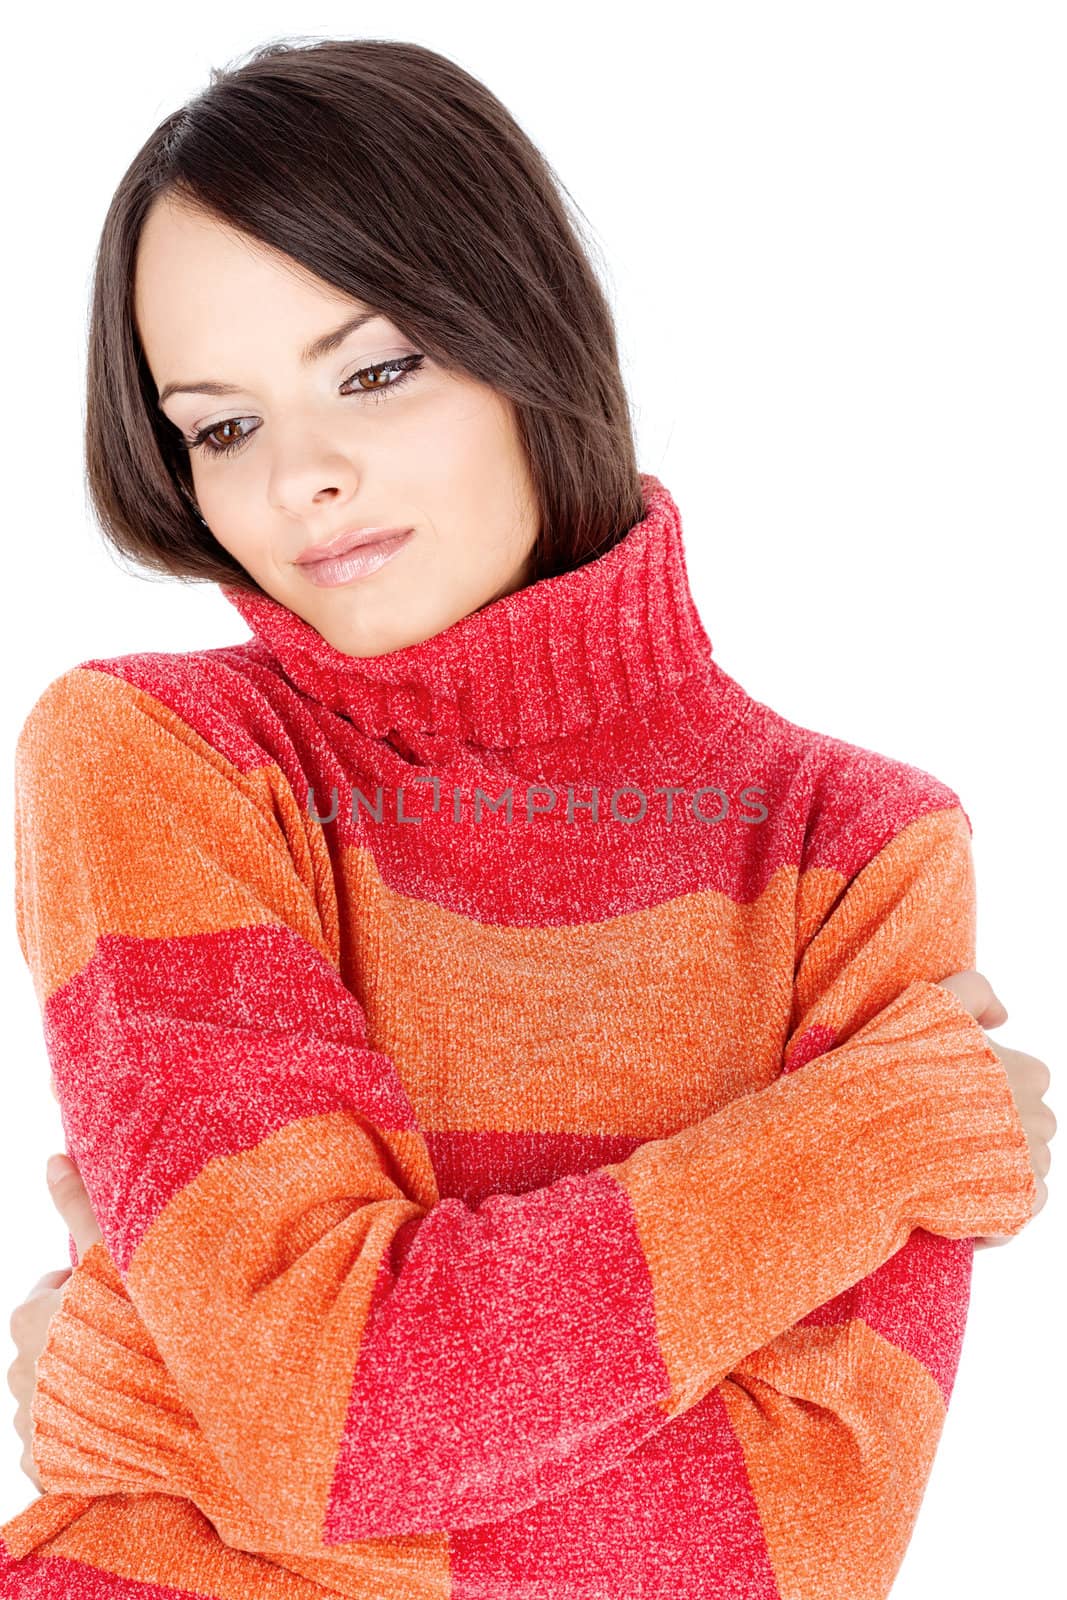 cute brunette woman in a red-orange wool sweater by imarin